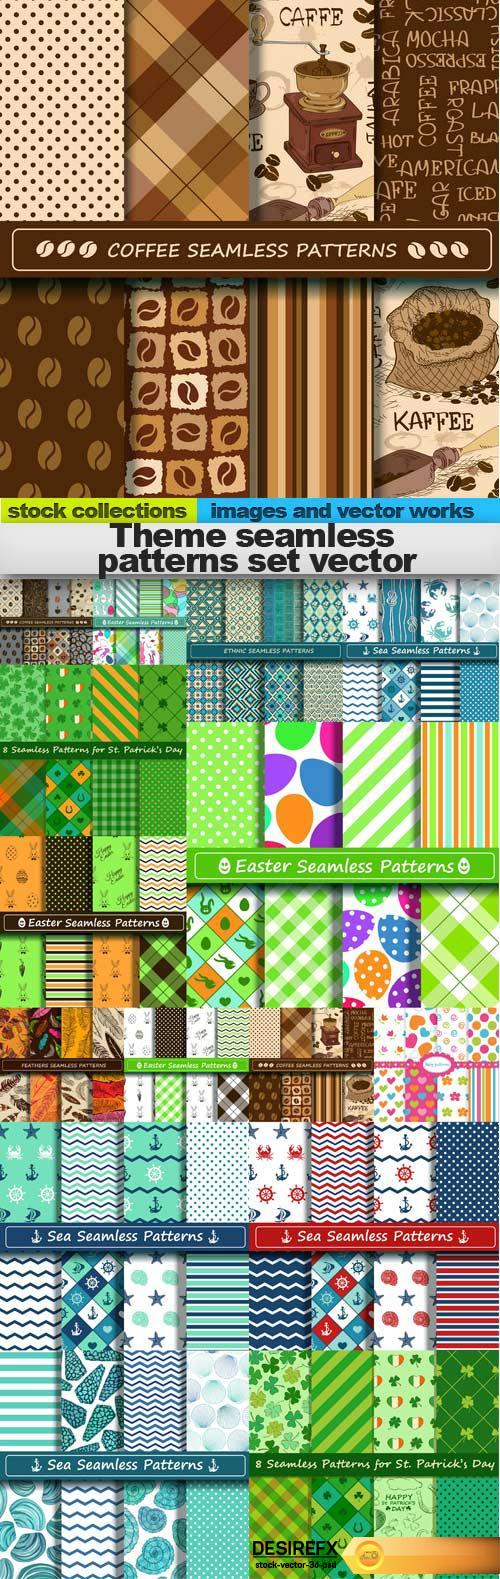 Theme seamless patterns set vector, 15 x EPS